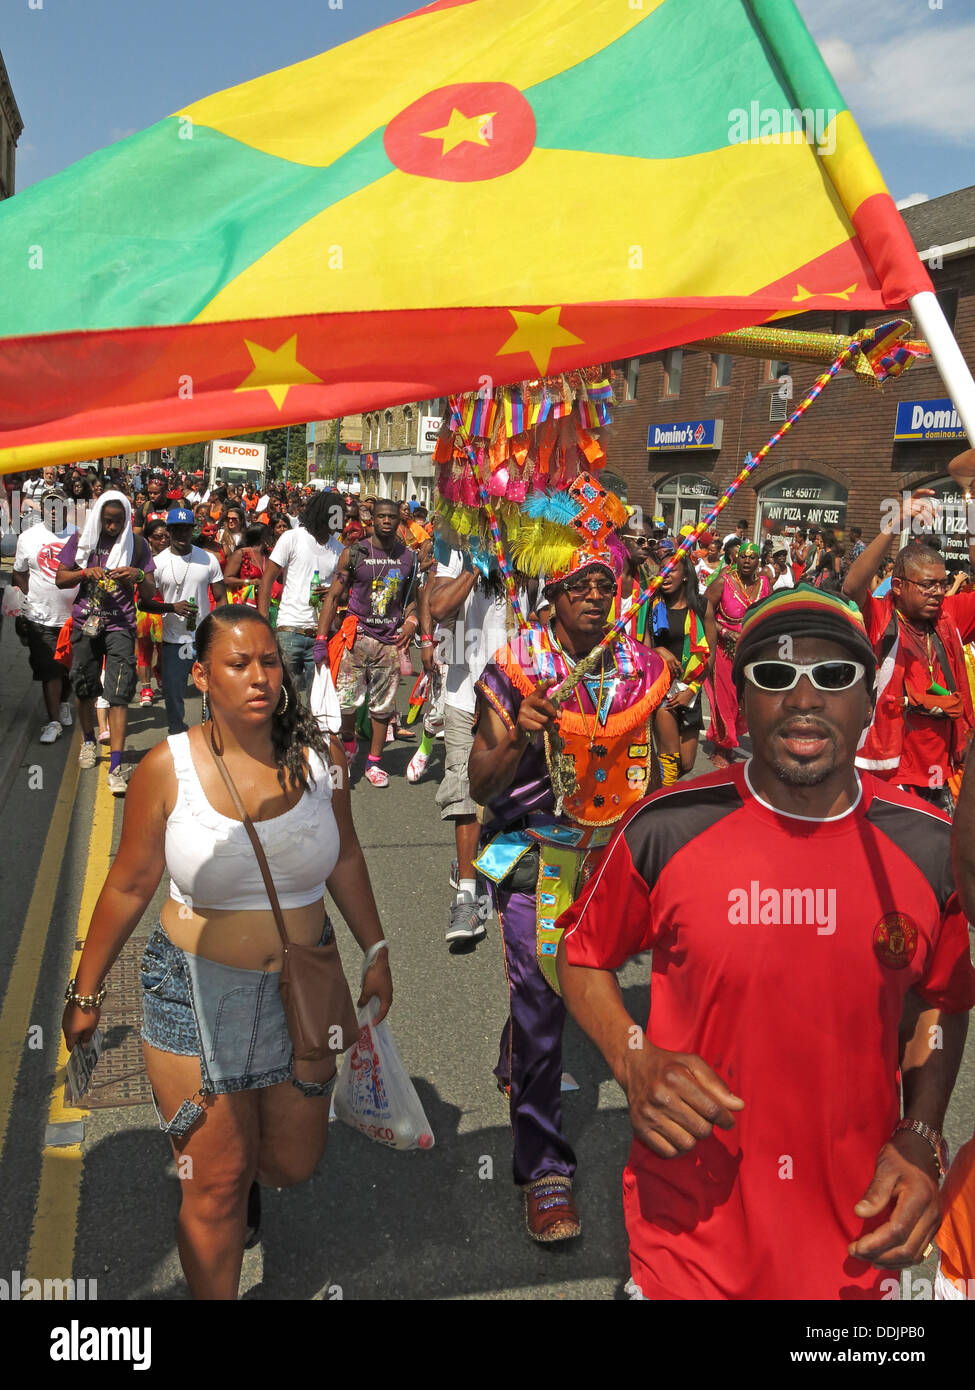 Ballerini in costume holding bandiera da Huddersfield Carnevale 2013 Caraibi africani parade street party Foto Stock